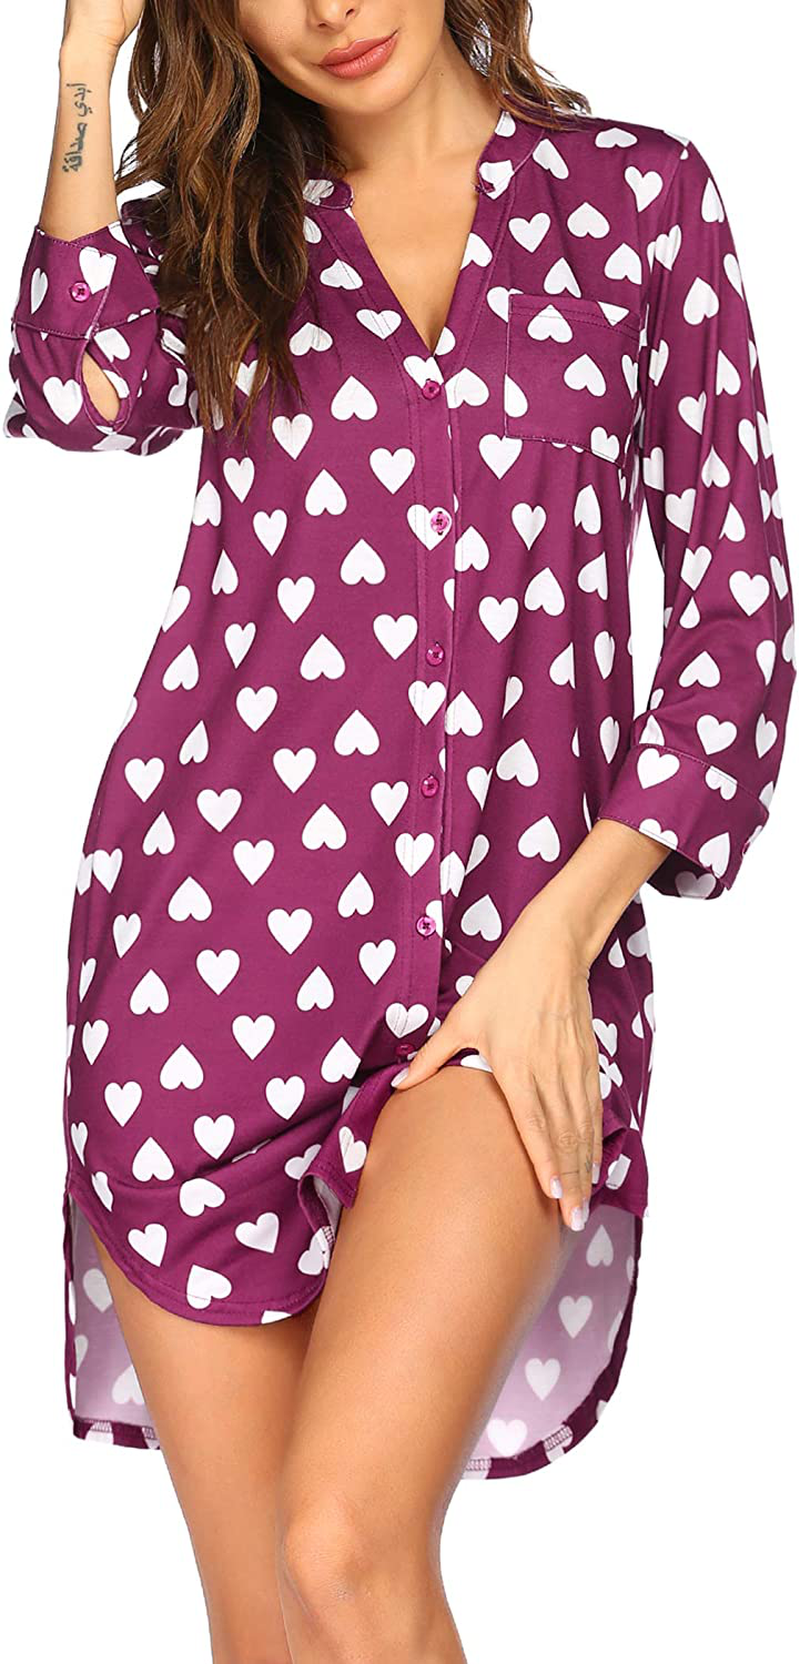 Ekouaer Women'S Nightgown Striped Sleepwear 3/4 Sleeves Nightshirts Soft Button Sleep Dress